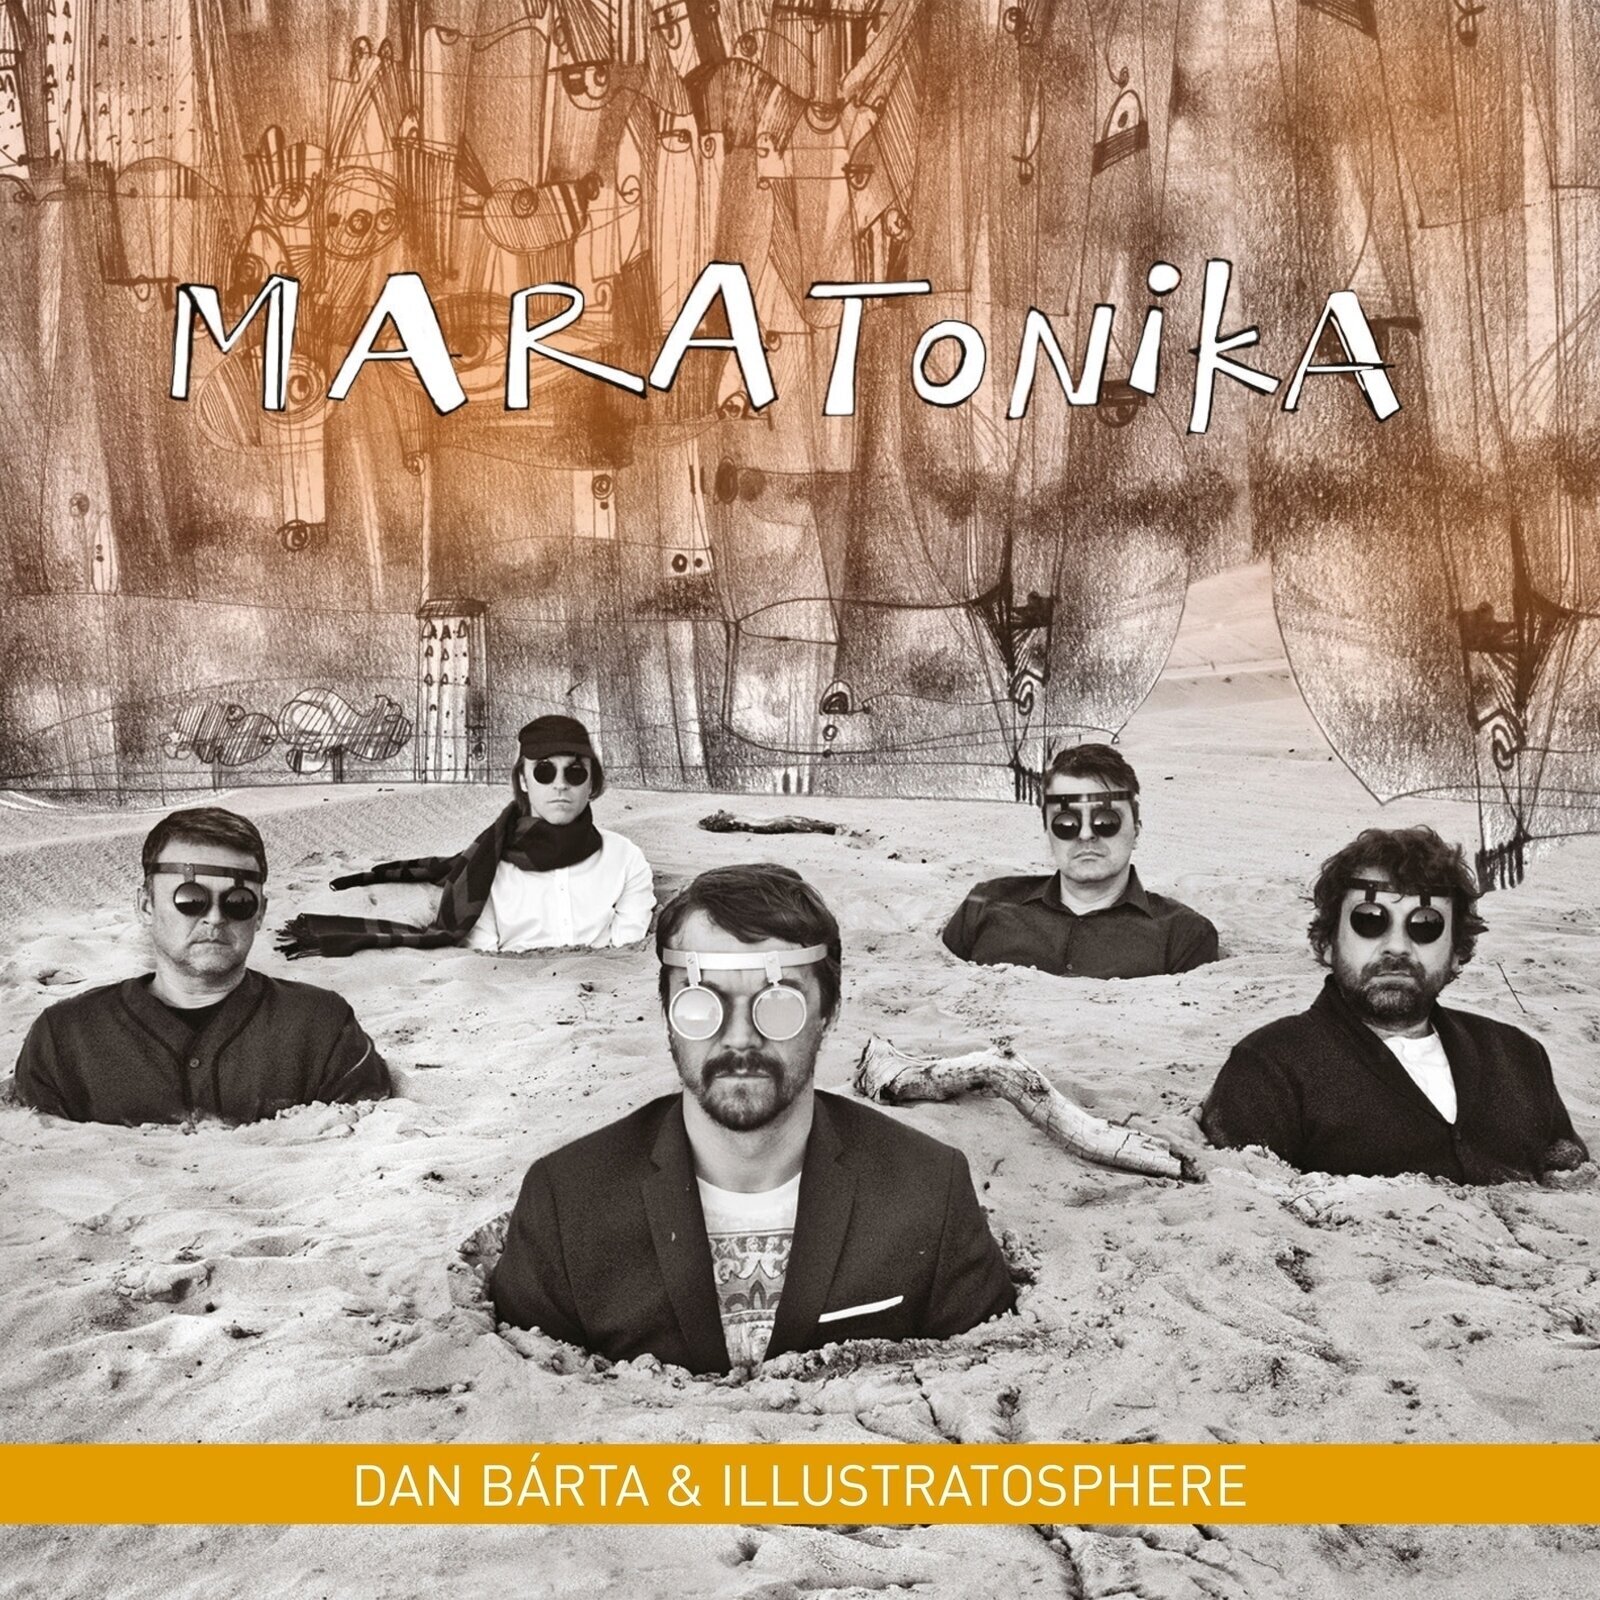 Dan Bárta & Illustratosphere - Maratonika (Remastered) (LP) Dan Bárta & Illustratosphere